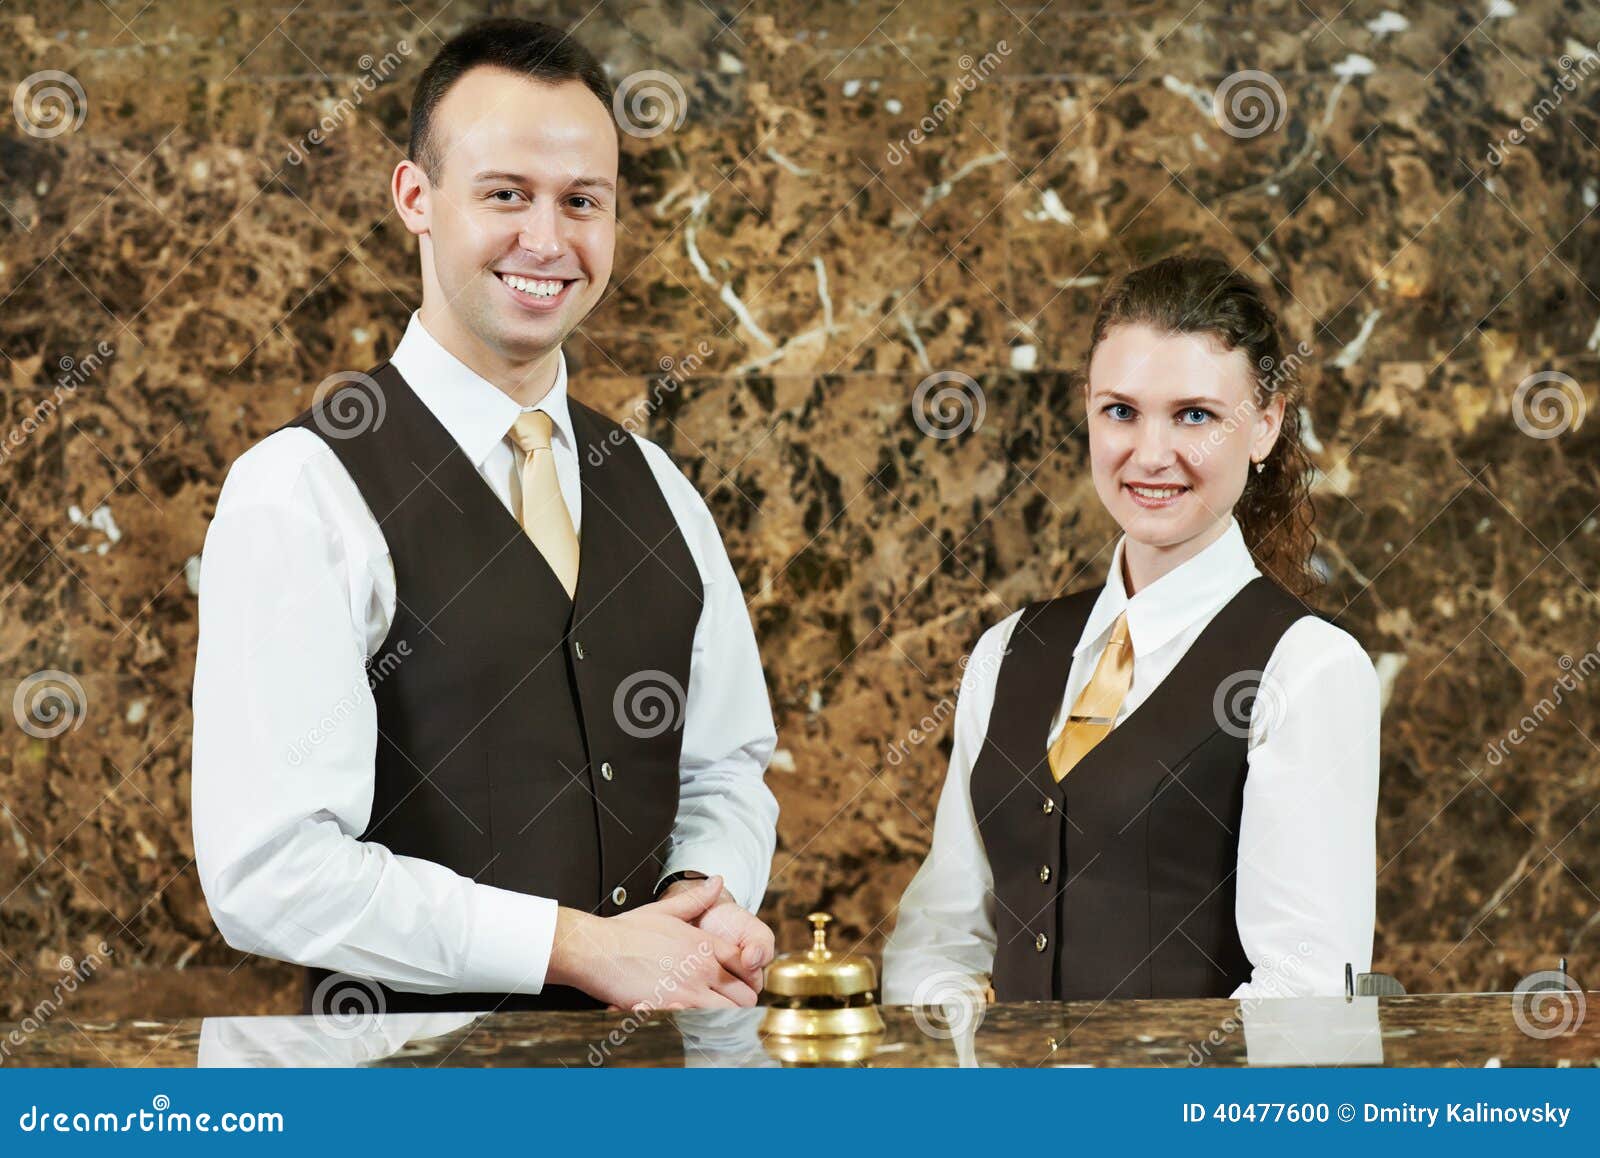 hotel worker on reception